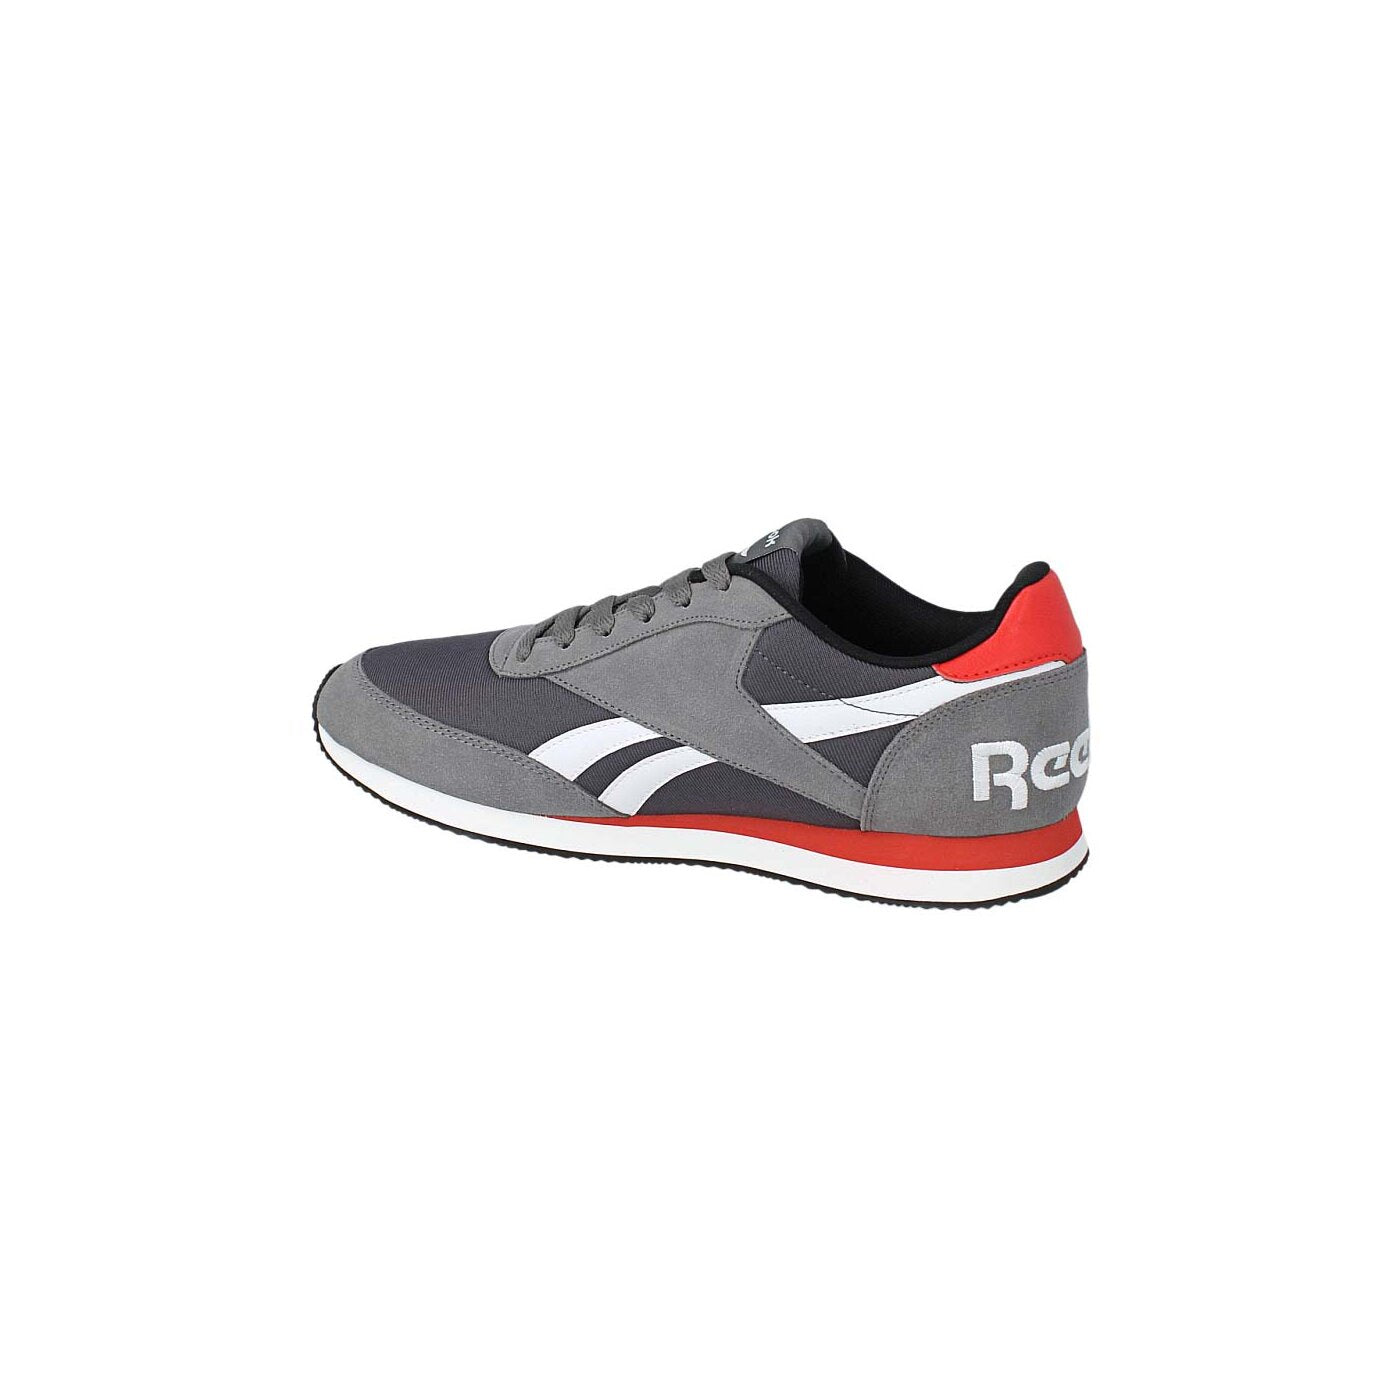 R-H9 (Royal cl jogger 2rs grey/white/red/black) 11695739 REEBOK